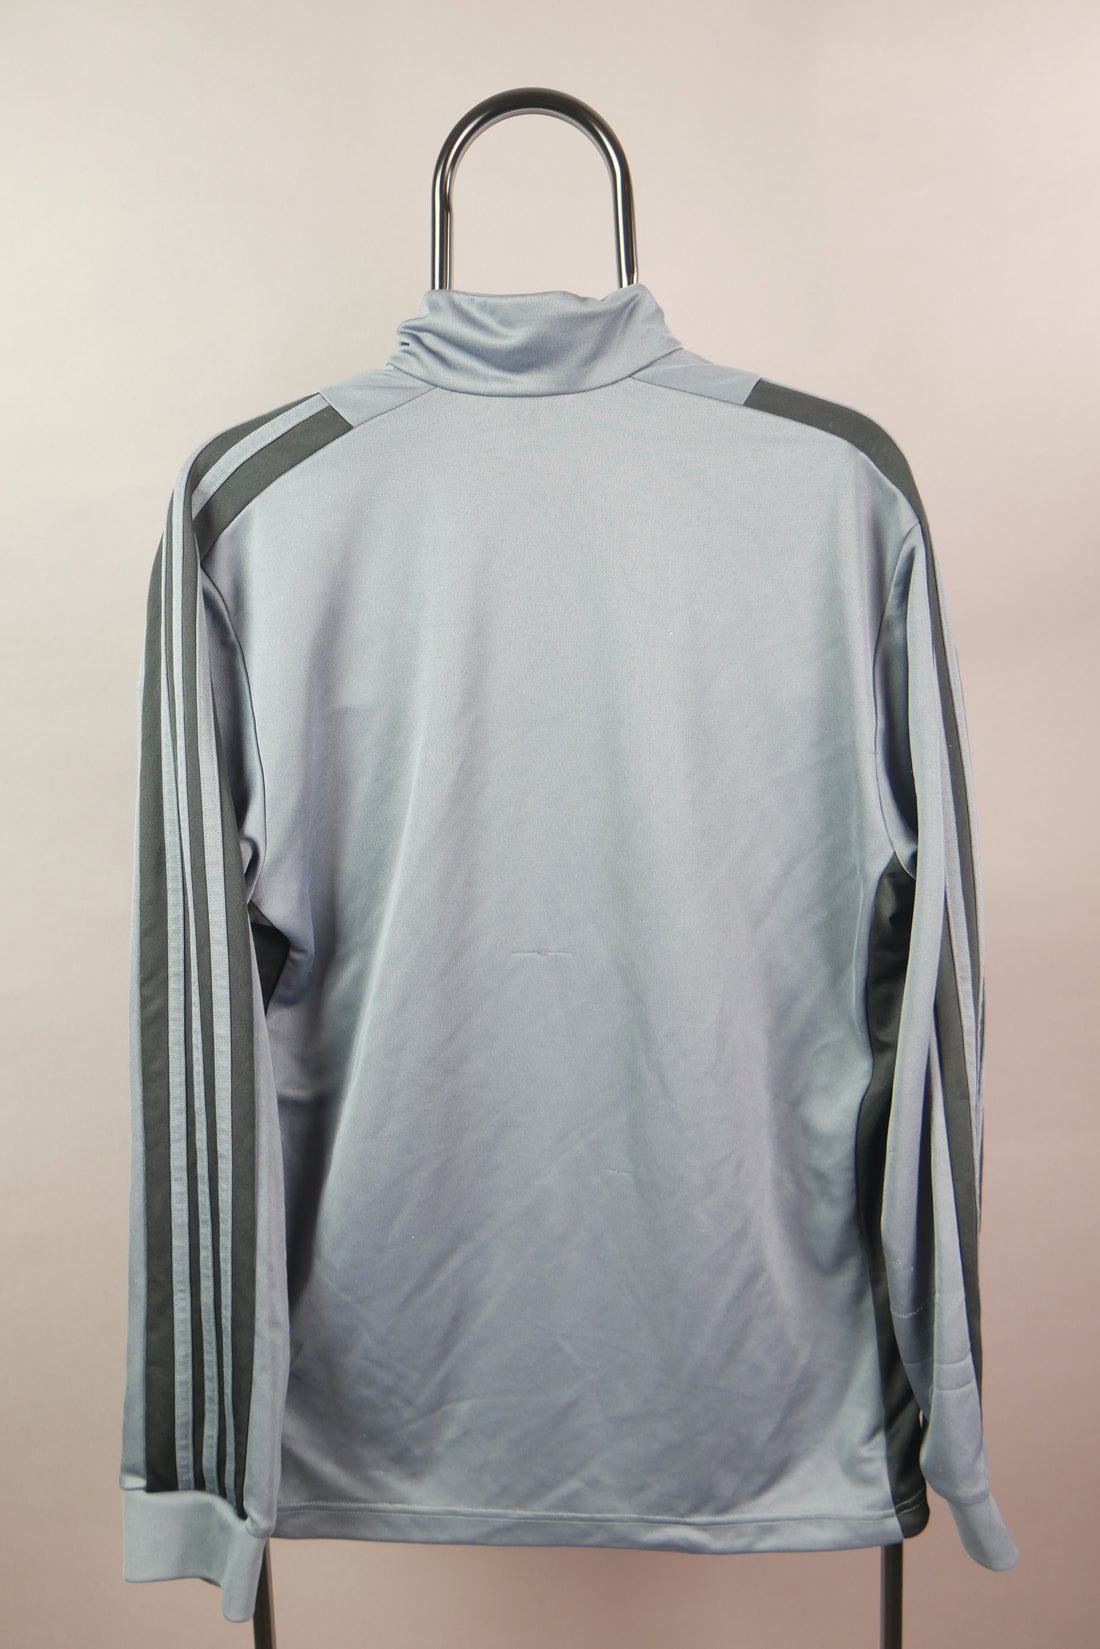 The 1/4 Zip Adidas Sweatshirt (L)